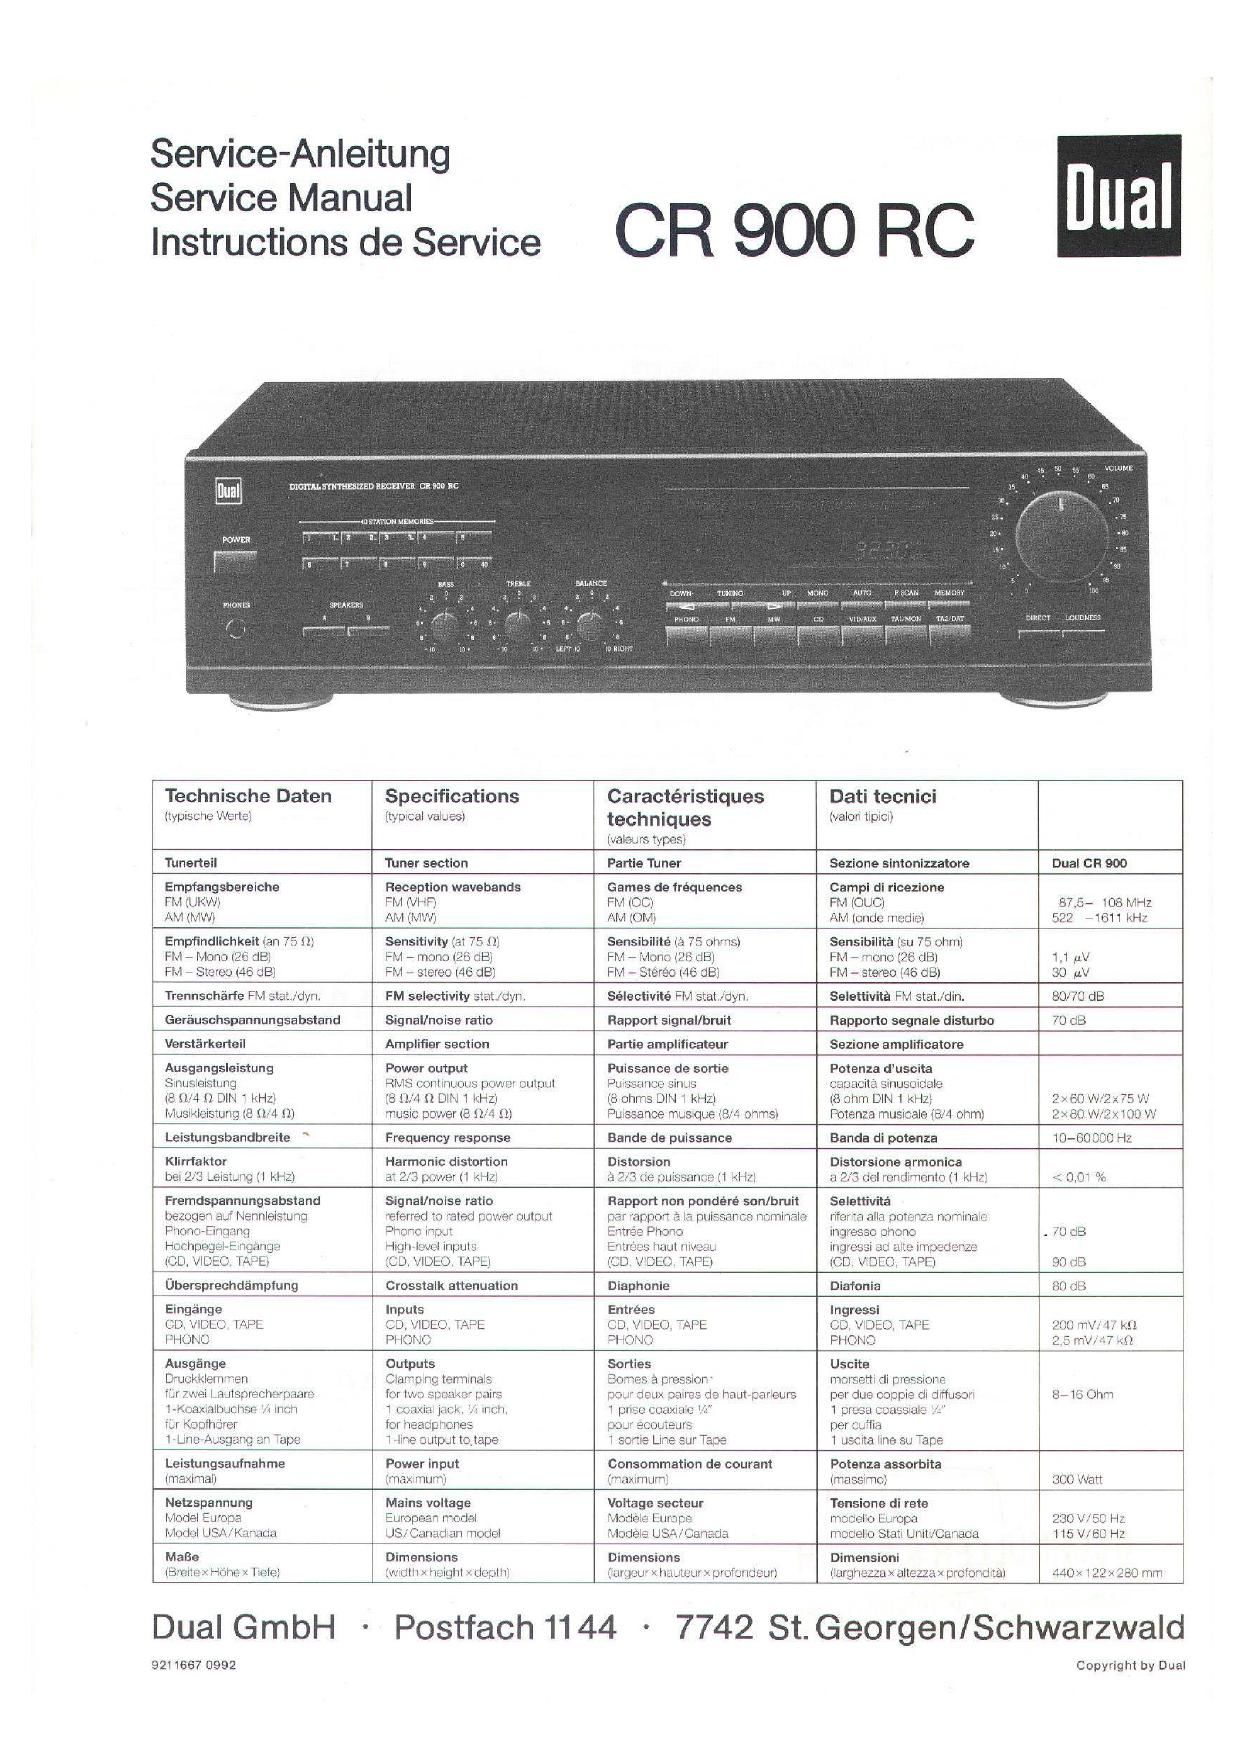 Dual CR 900 RC Service Manual